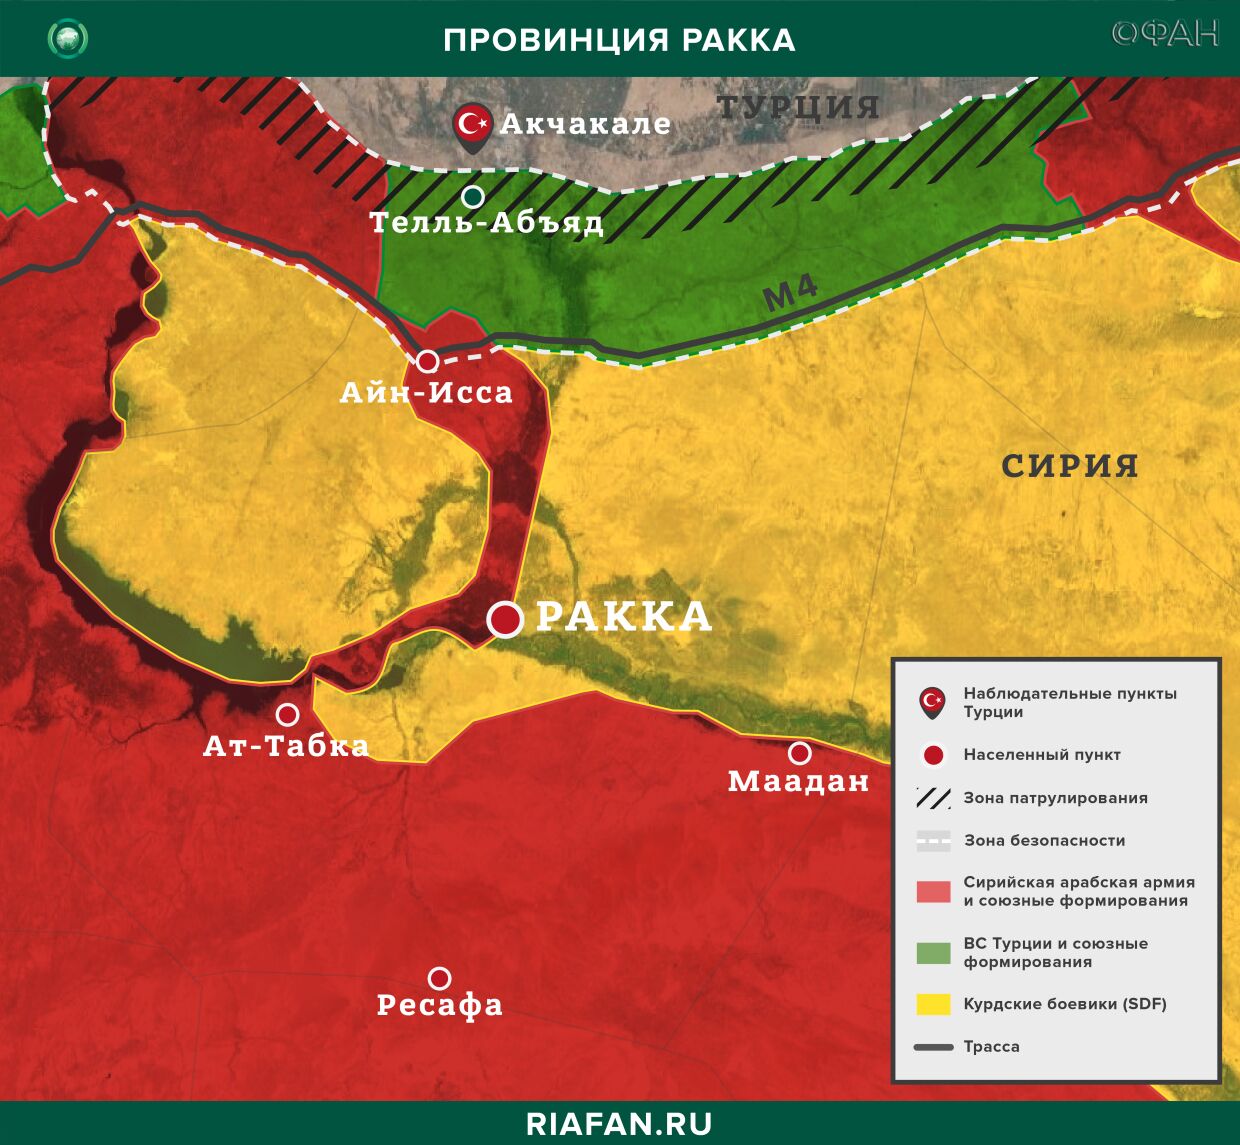 Resultados diarios de Siria para 5 Septiembre 06.00: Турцию подозревают в подготовке наступления в САР